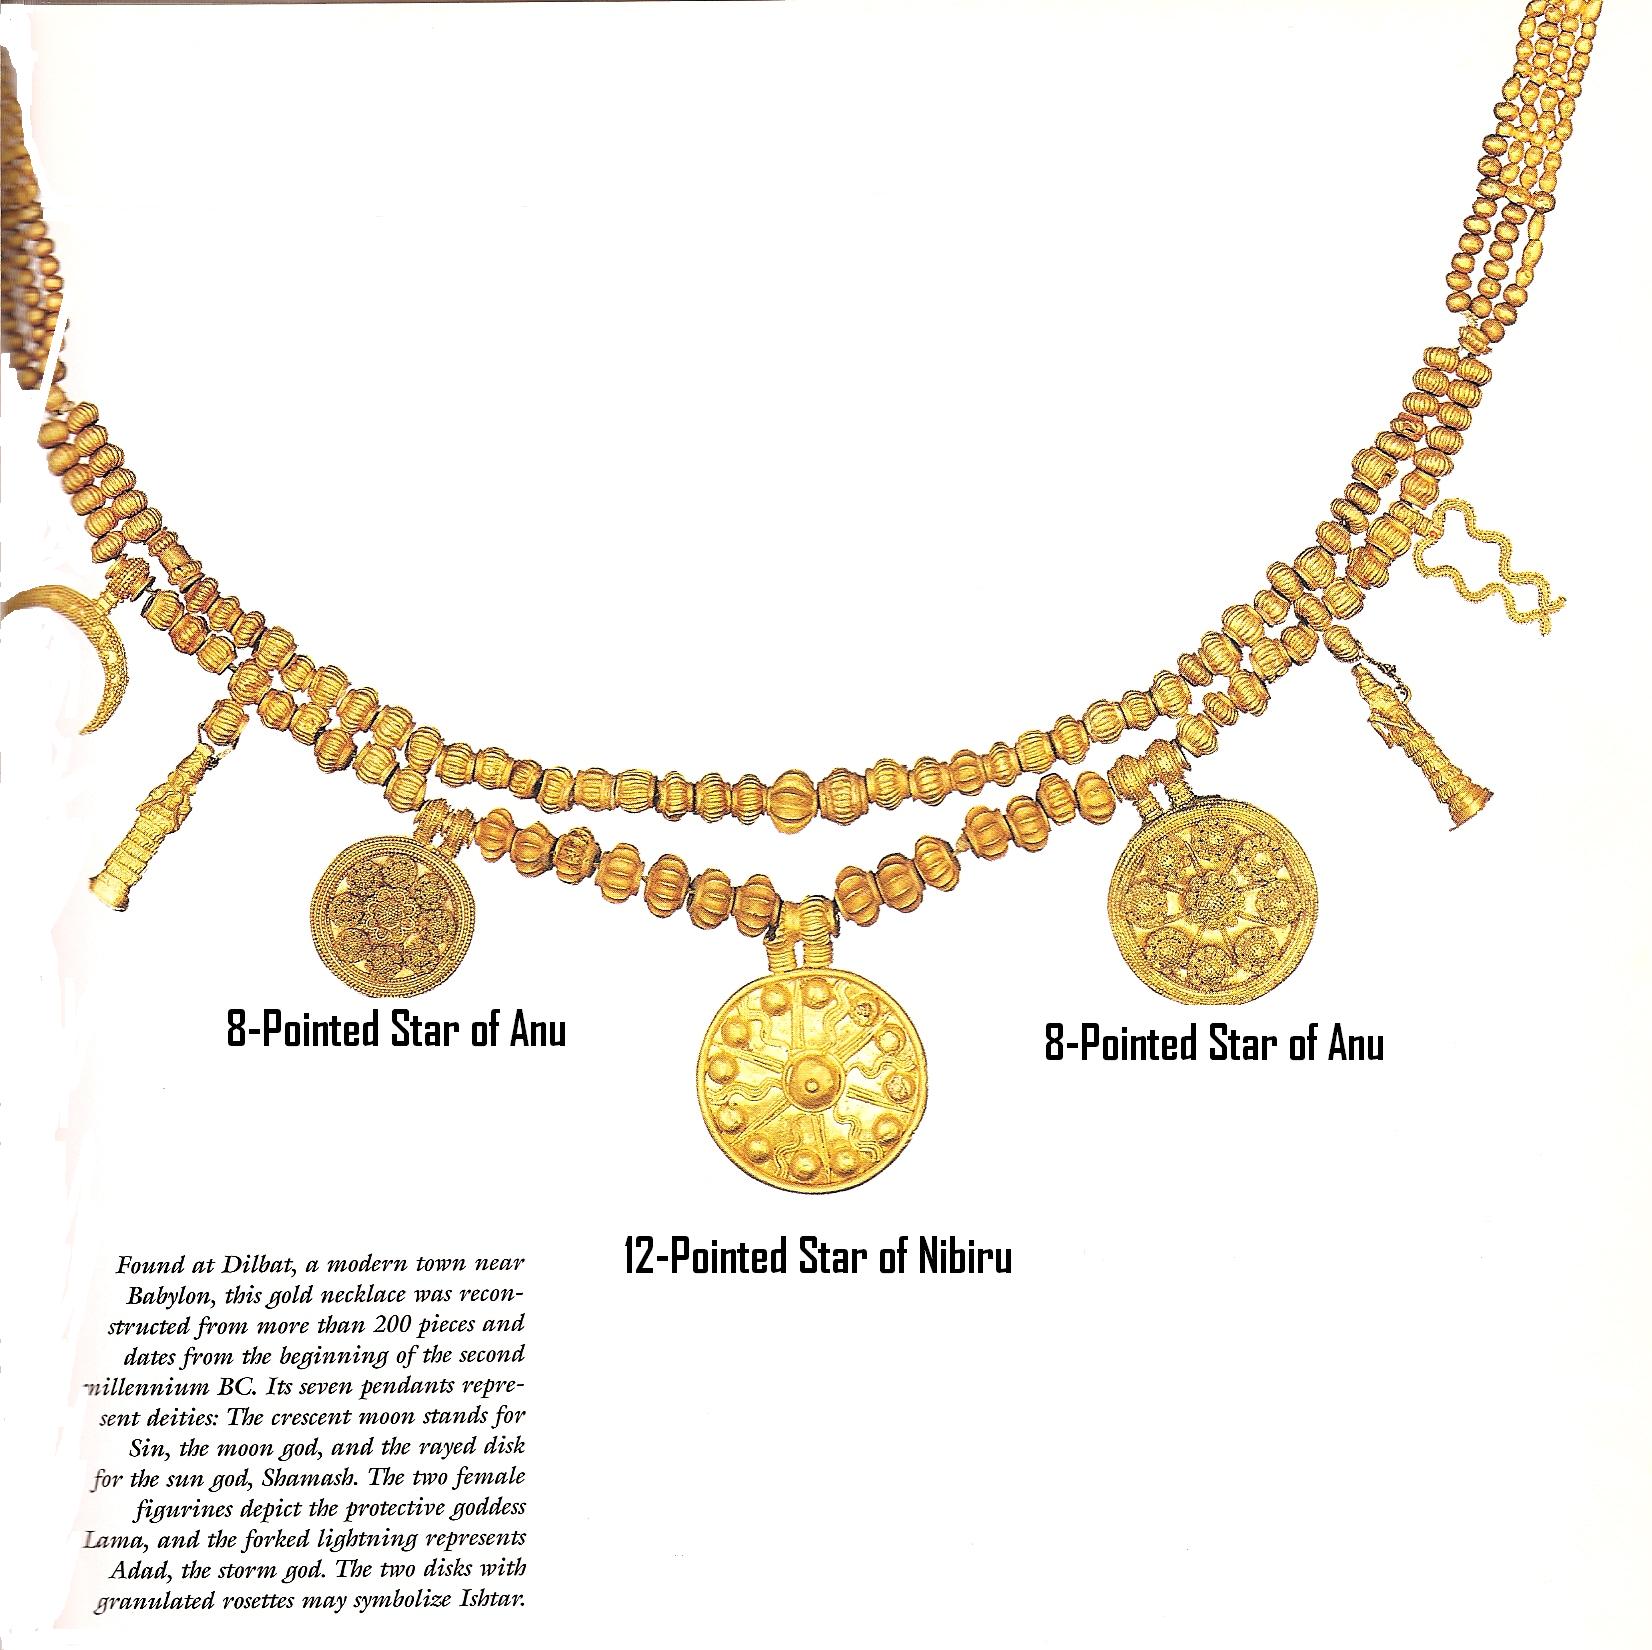 6d - 2,000 B.C. artefact discovered near Babylon, Nibiru symbols decorate the necklace, 12-pointed star symbol of Nibiru